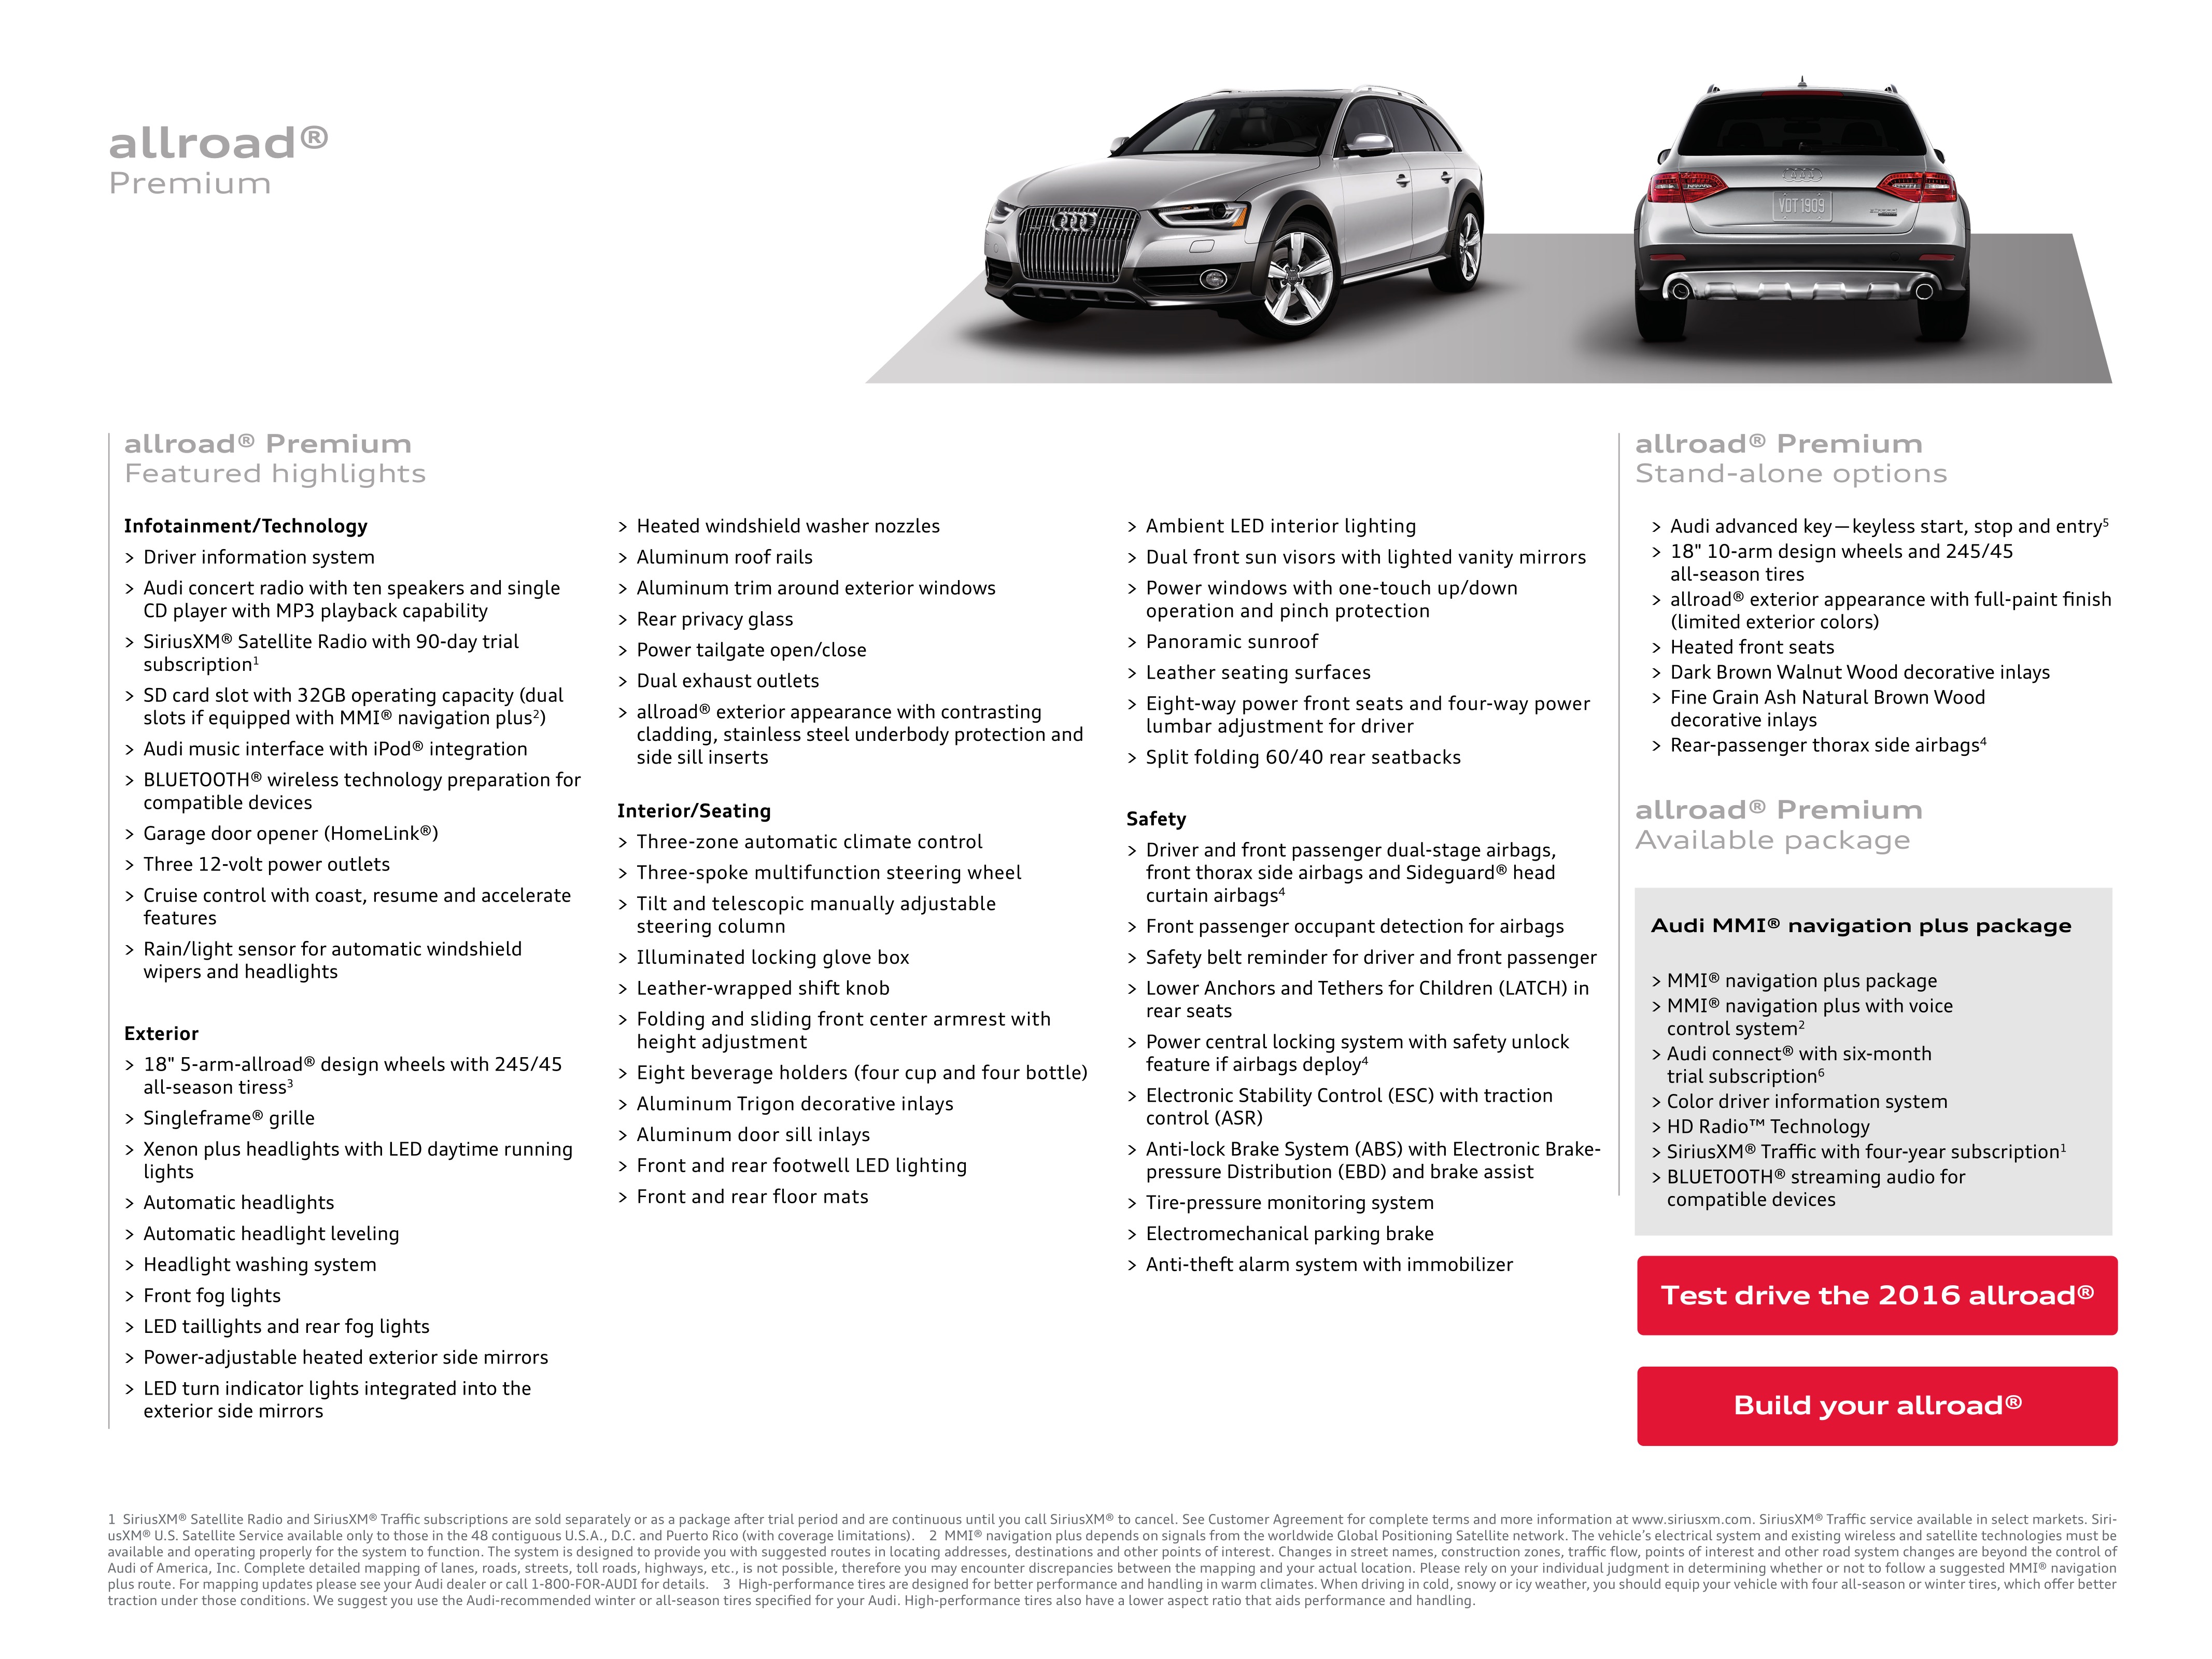 2016 Audi Allroad Brochure Page 23